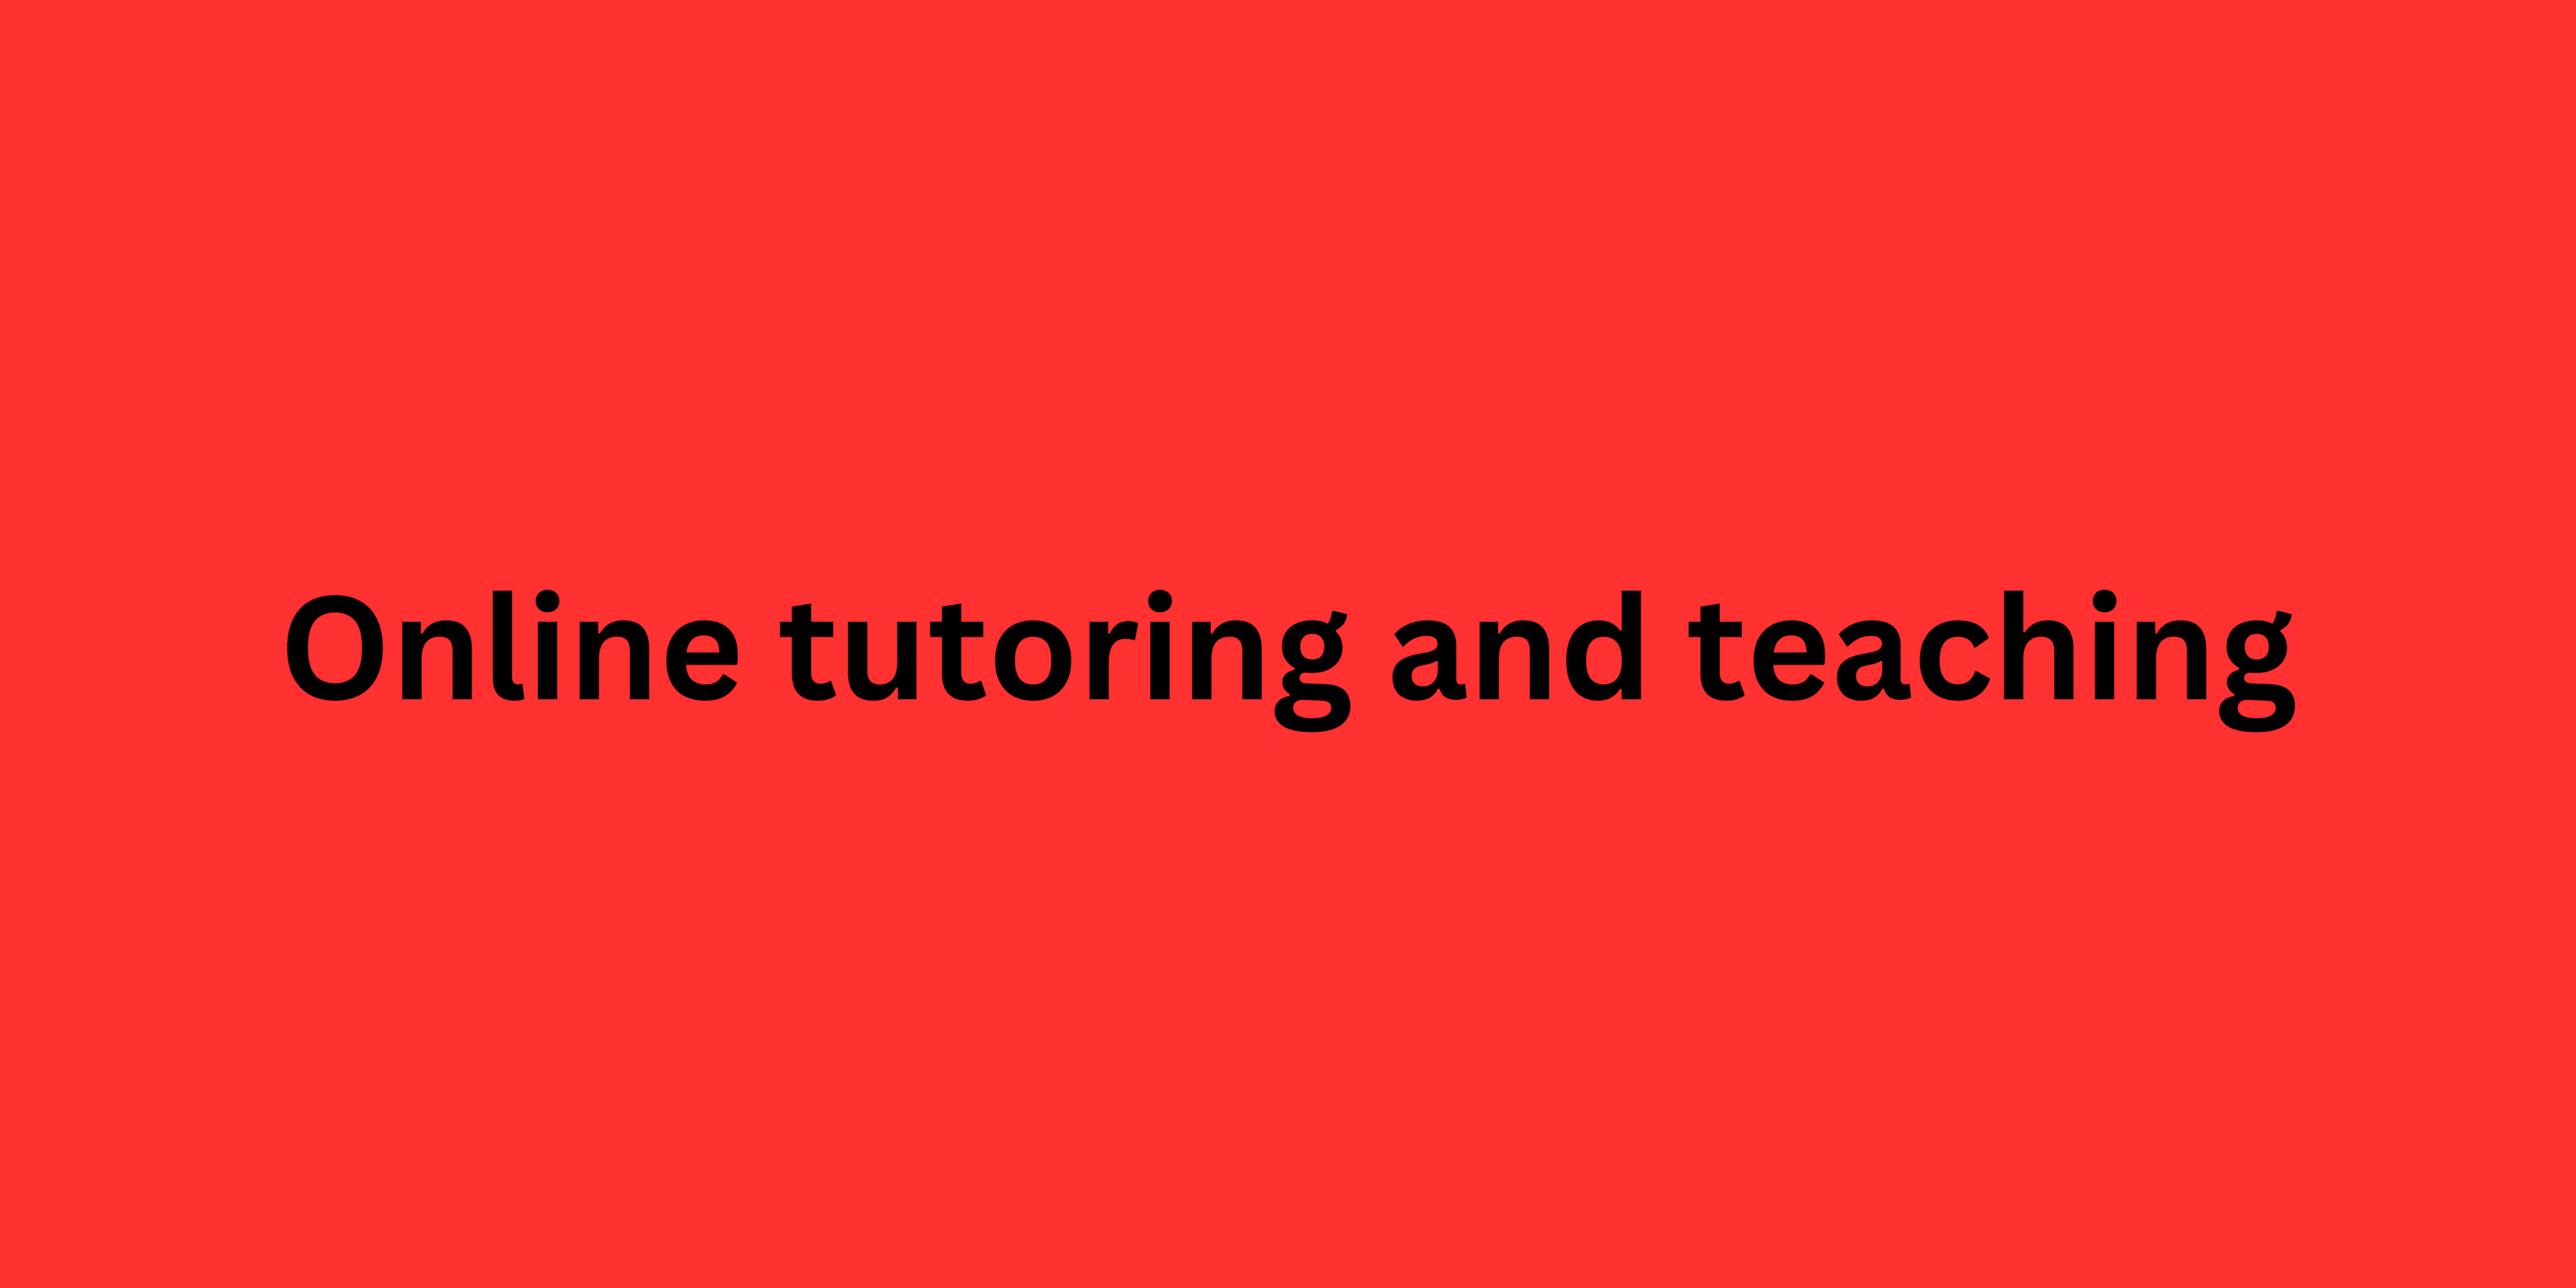 Online tutoring and teaching